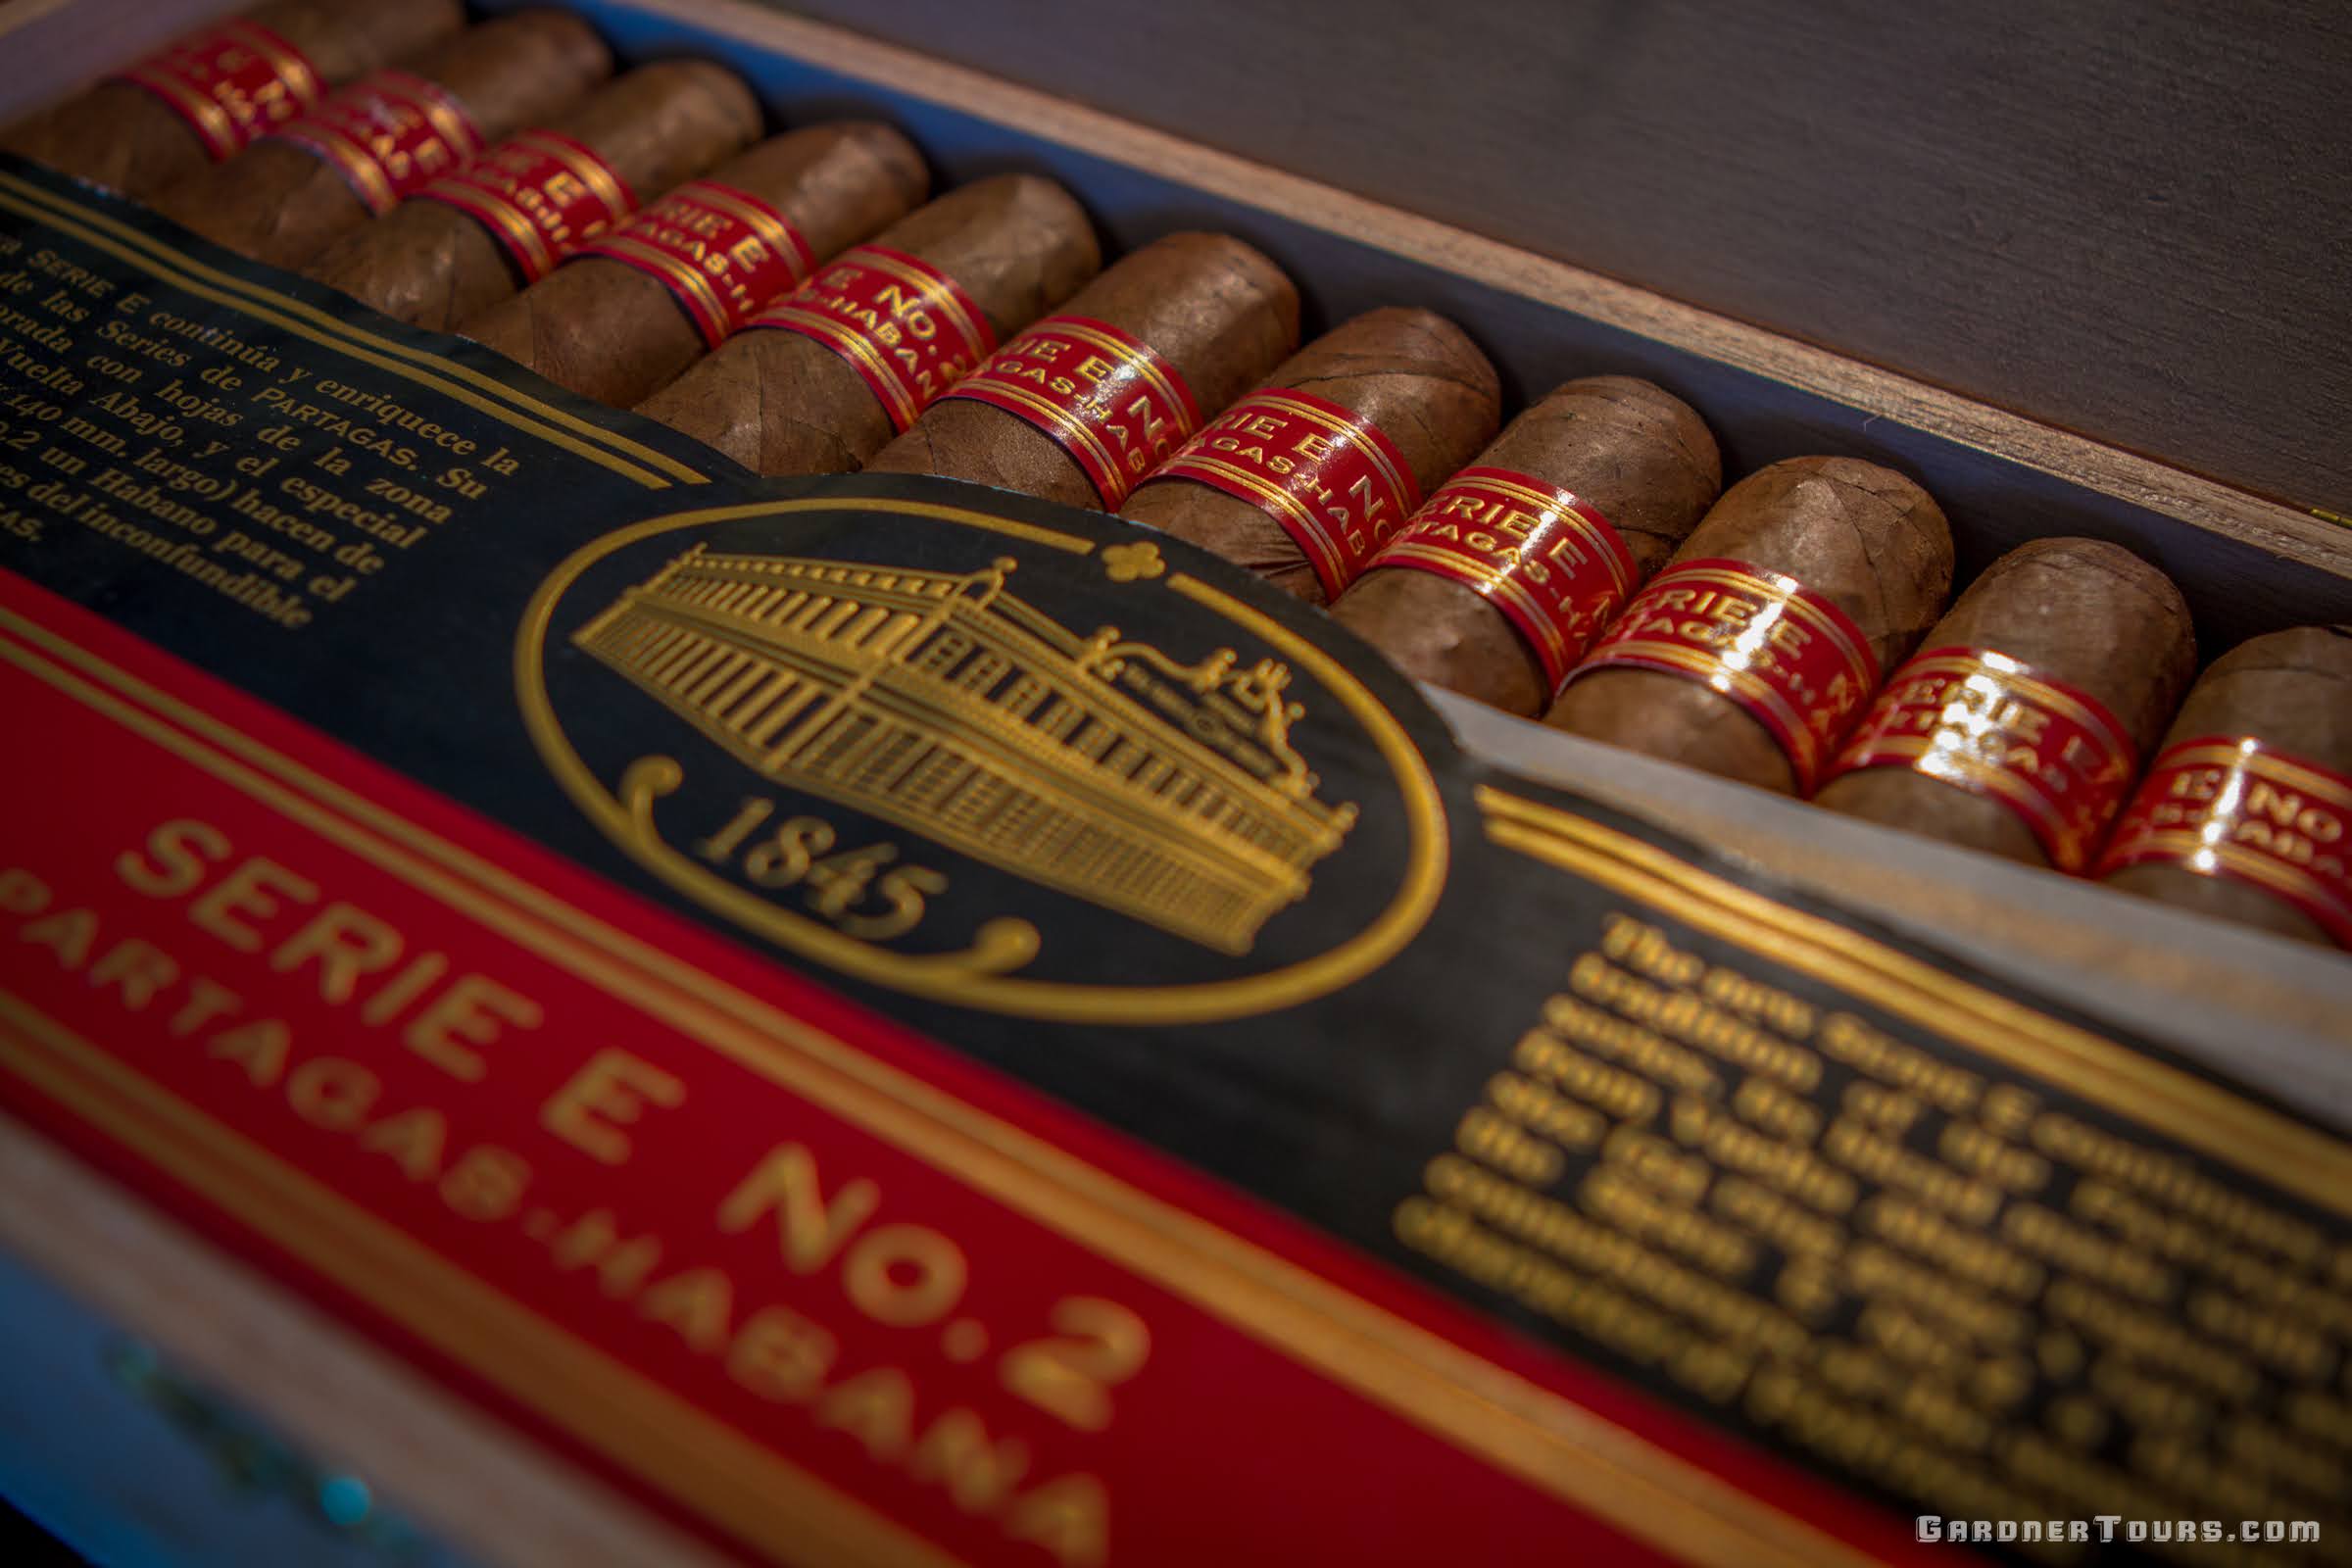 A crisp box of Partagas Series E No. 2 Cuban Cigars in the perfect lighting